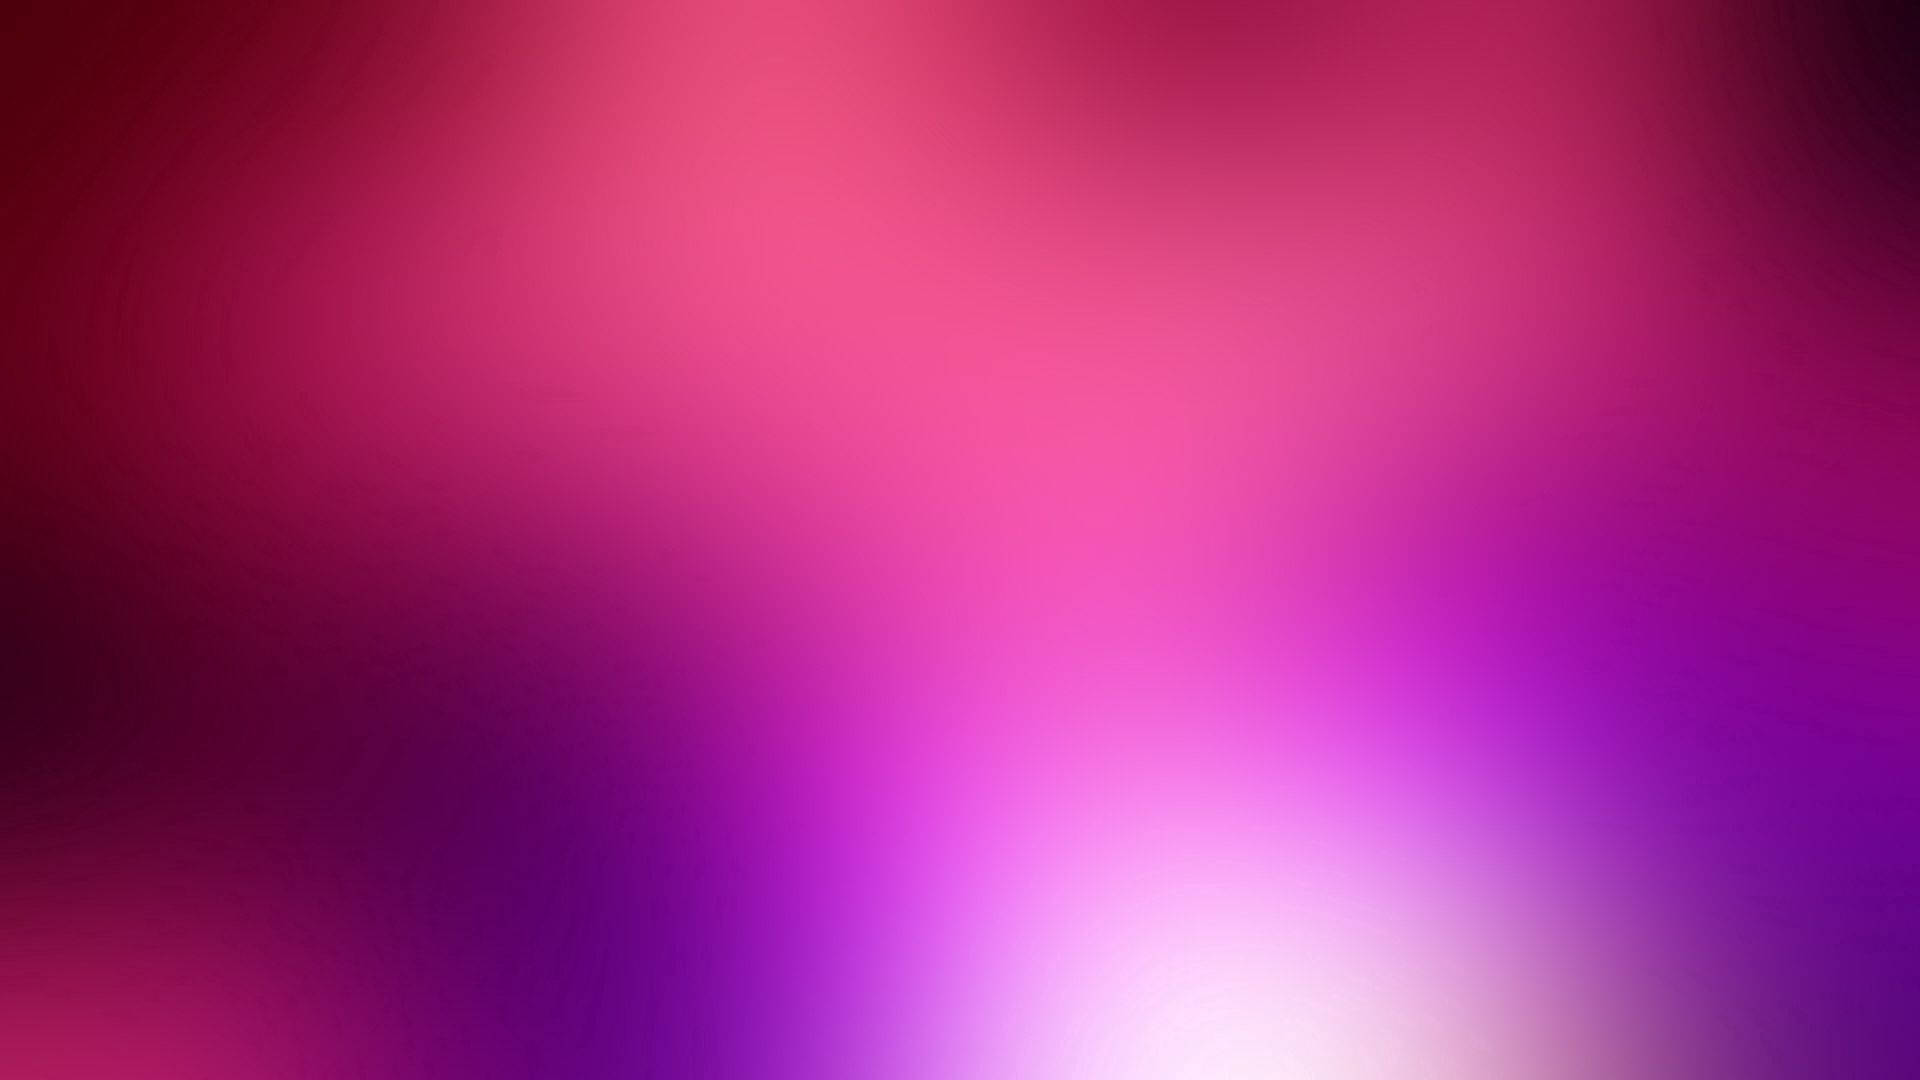 Shiny, Bright, and Pink Wallpaper